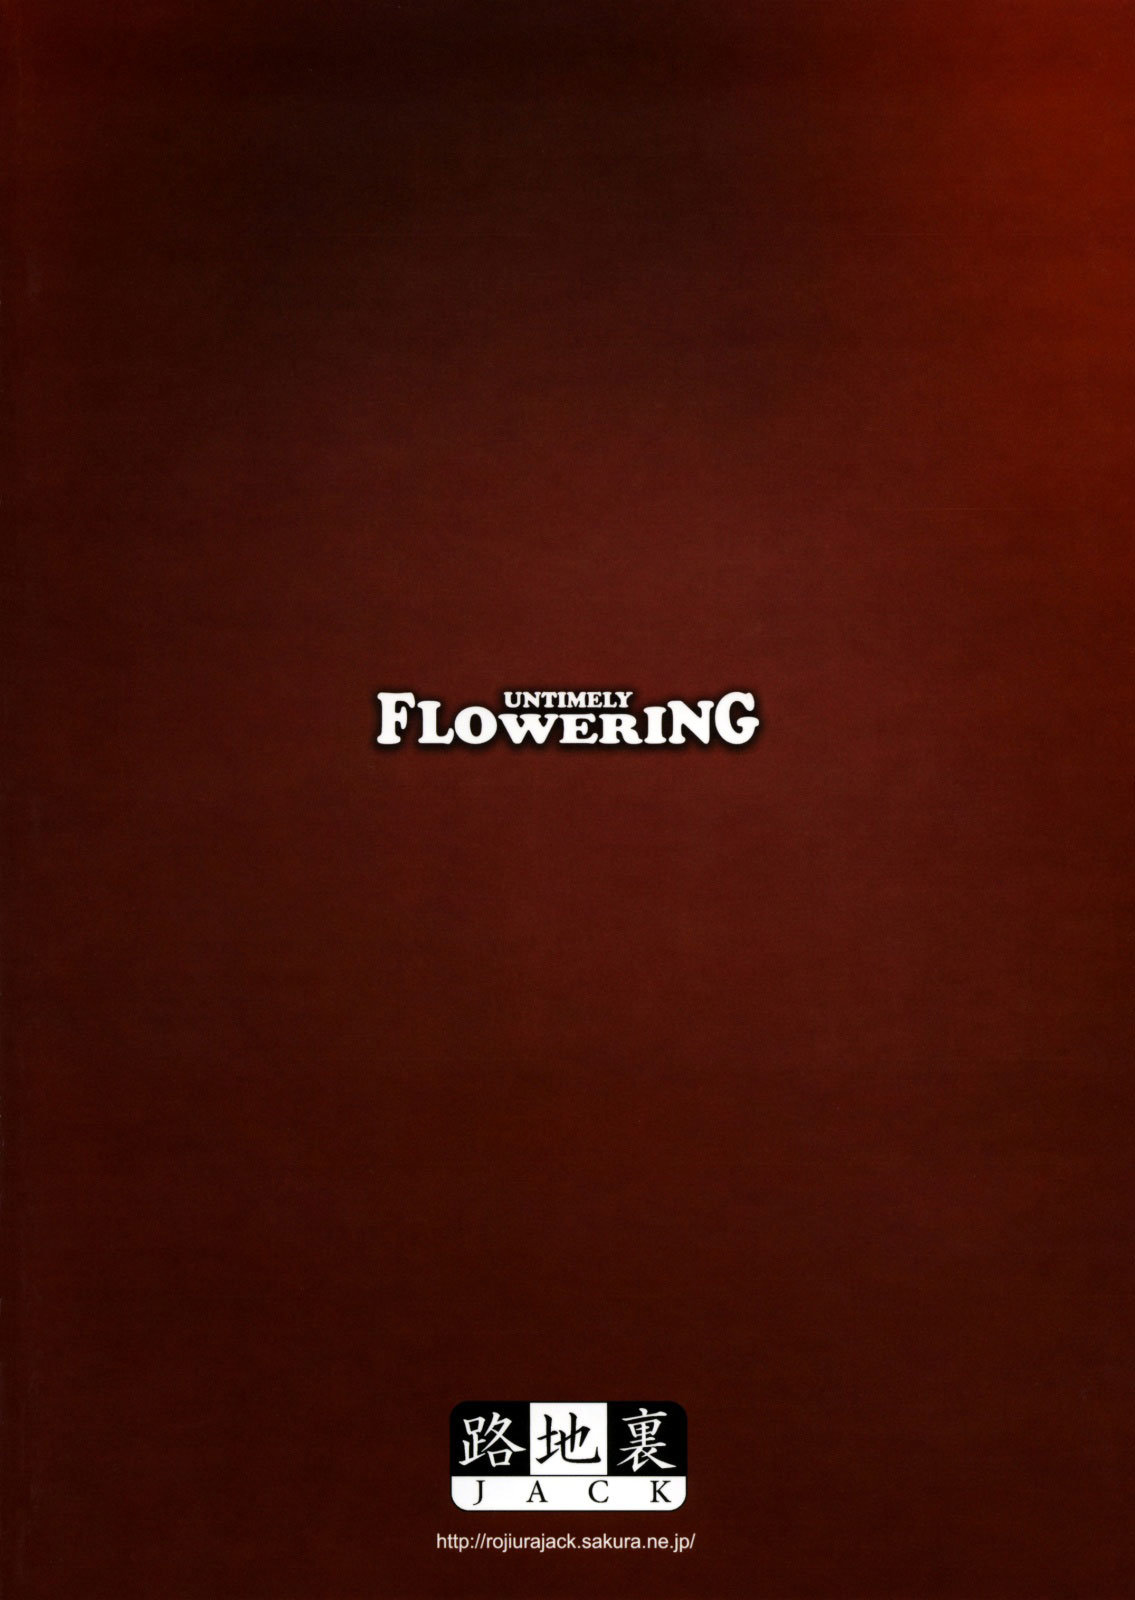 Untimely Flowering (One Piece) - Jun - 21